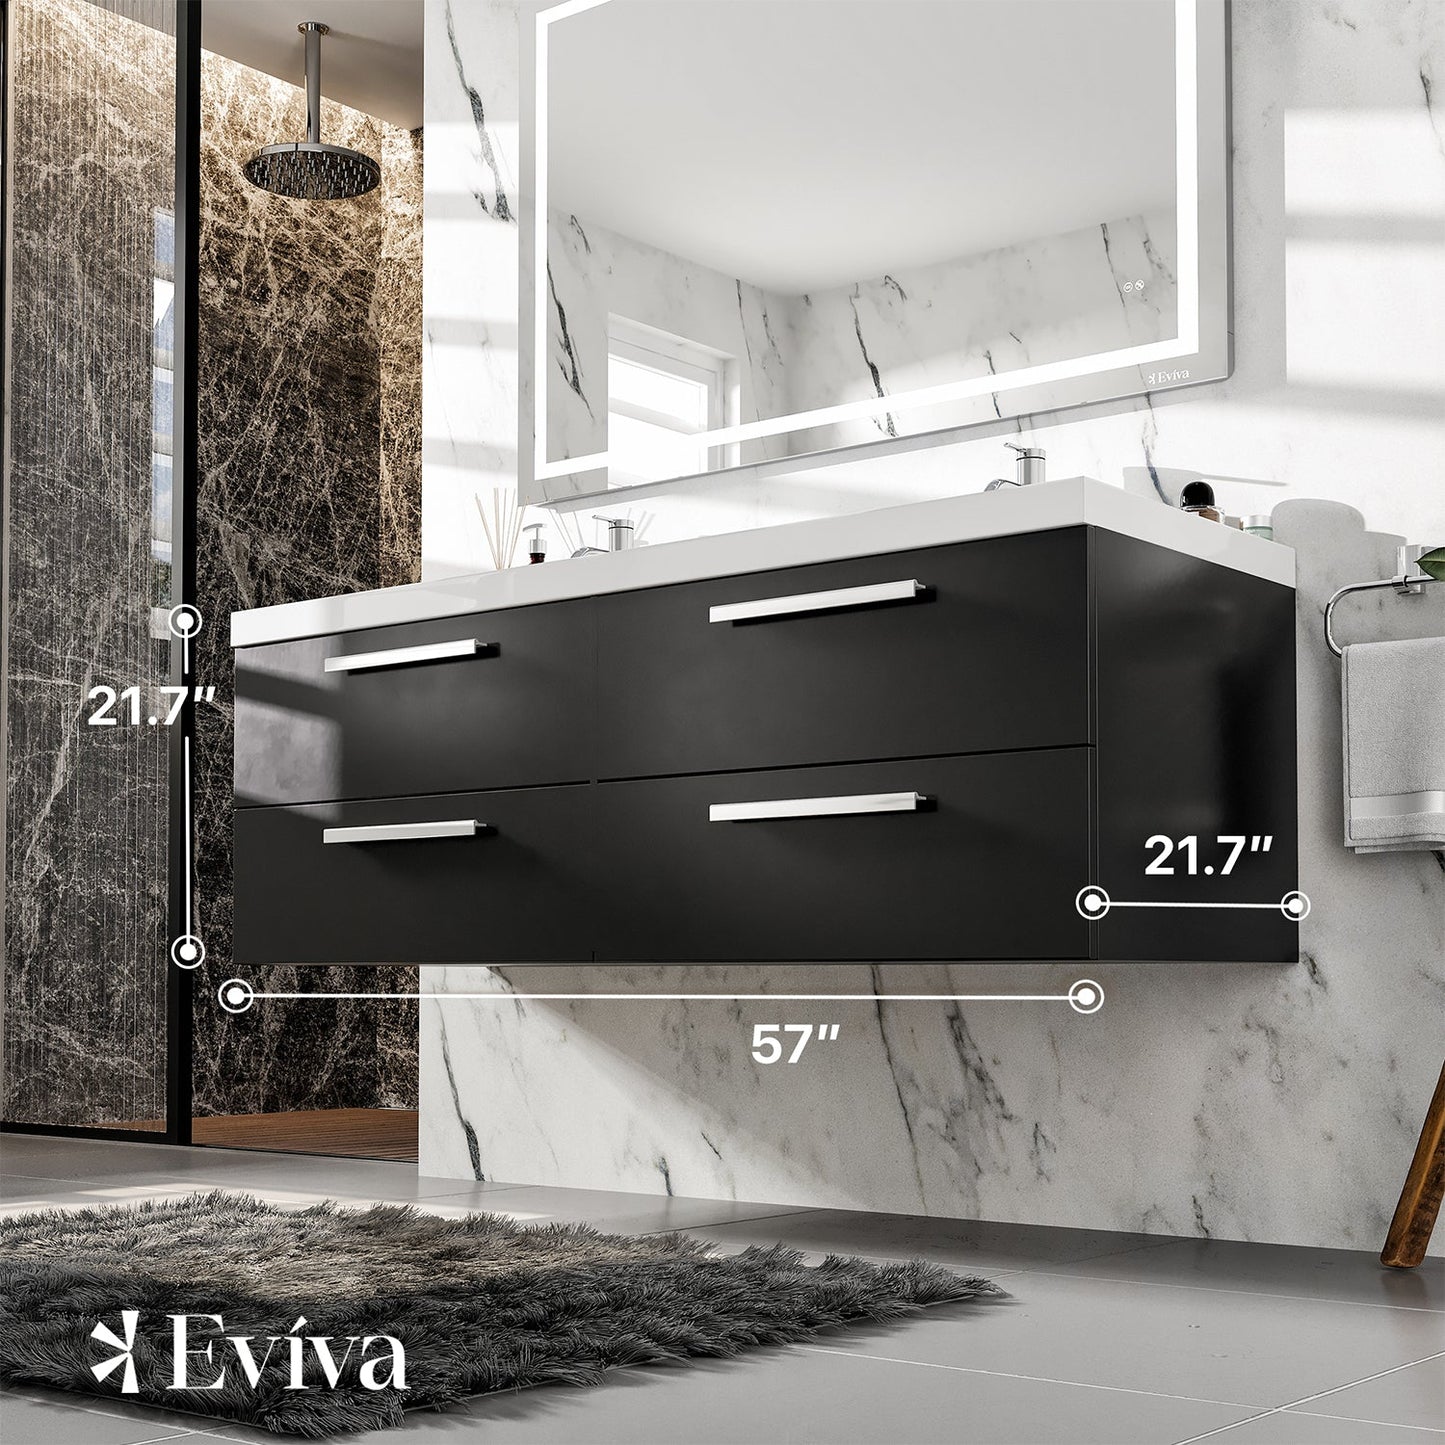 Eviva Surf 57" Black-Wood Modern Bathroom Vanity Set with Integrated White Acrylic Double Sink